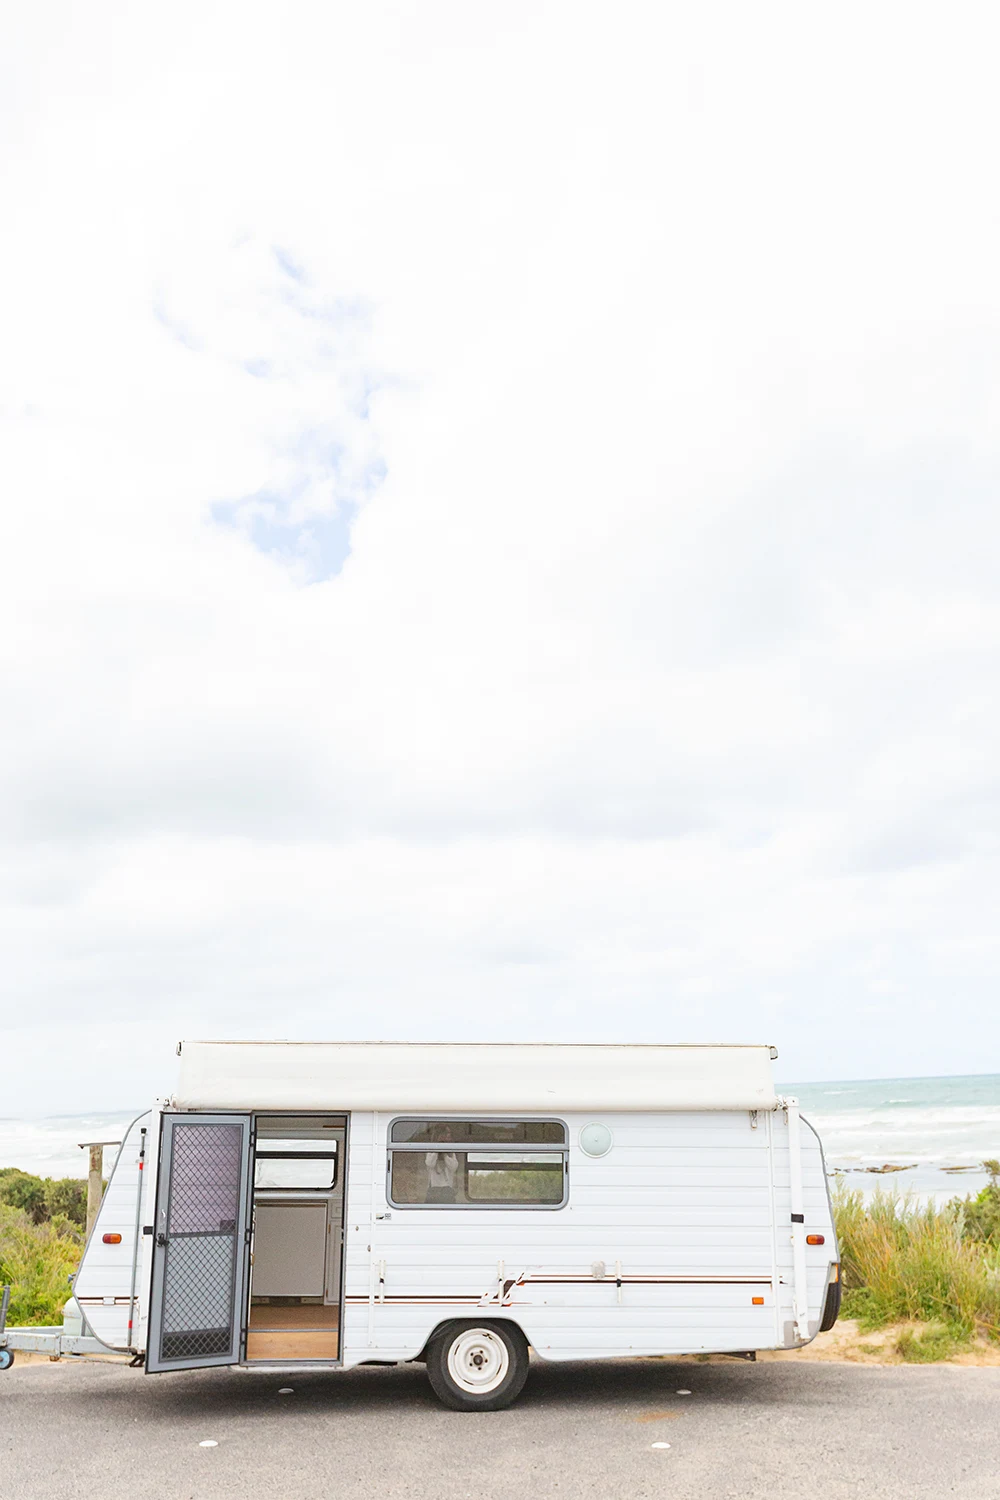 Vintage pop top caravan parked at a beach location